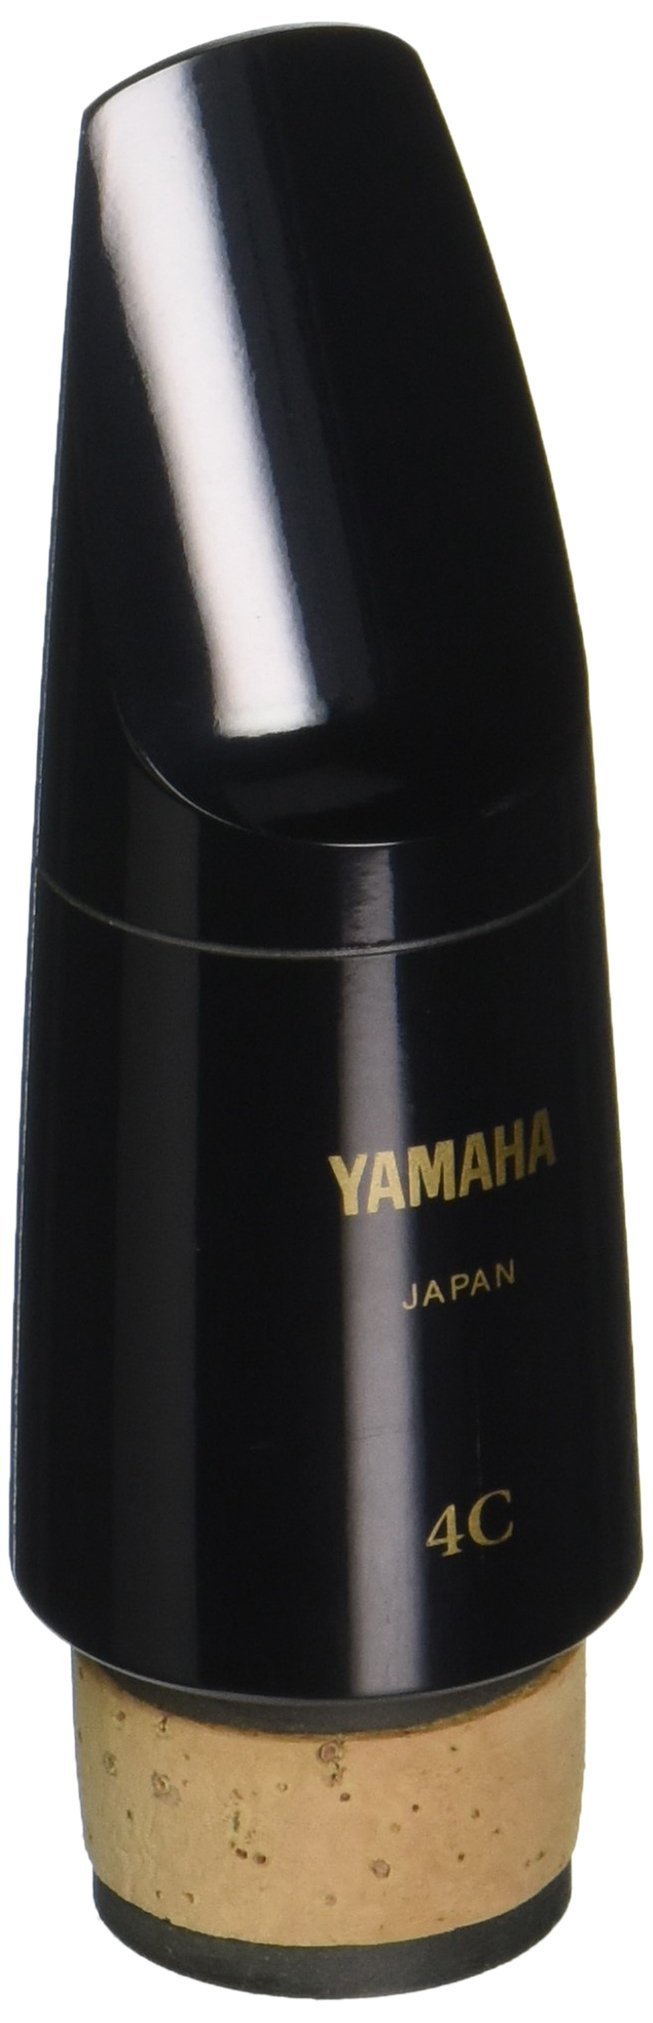 Yamaha YAC1270 4C Standard Alto Clarinet Mouthpiece